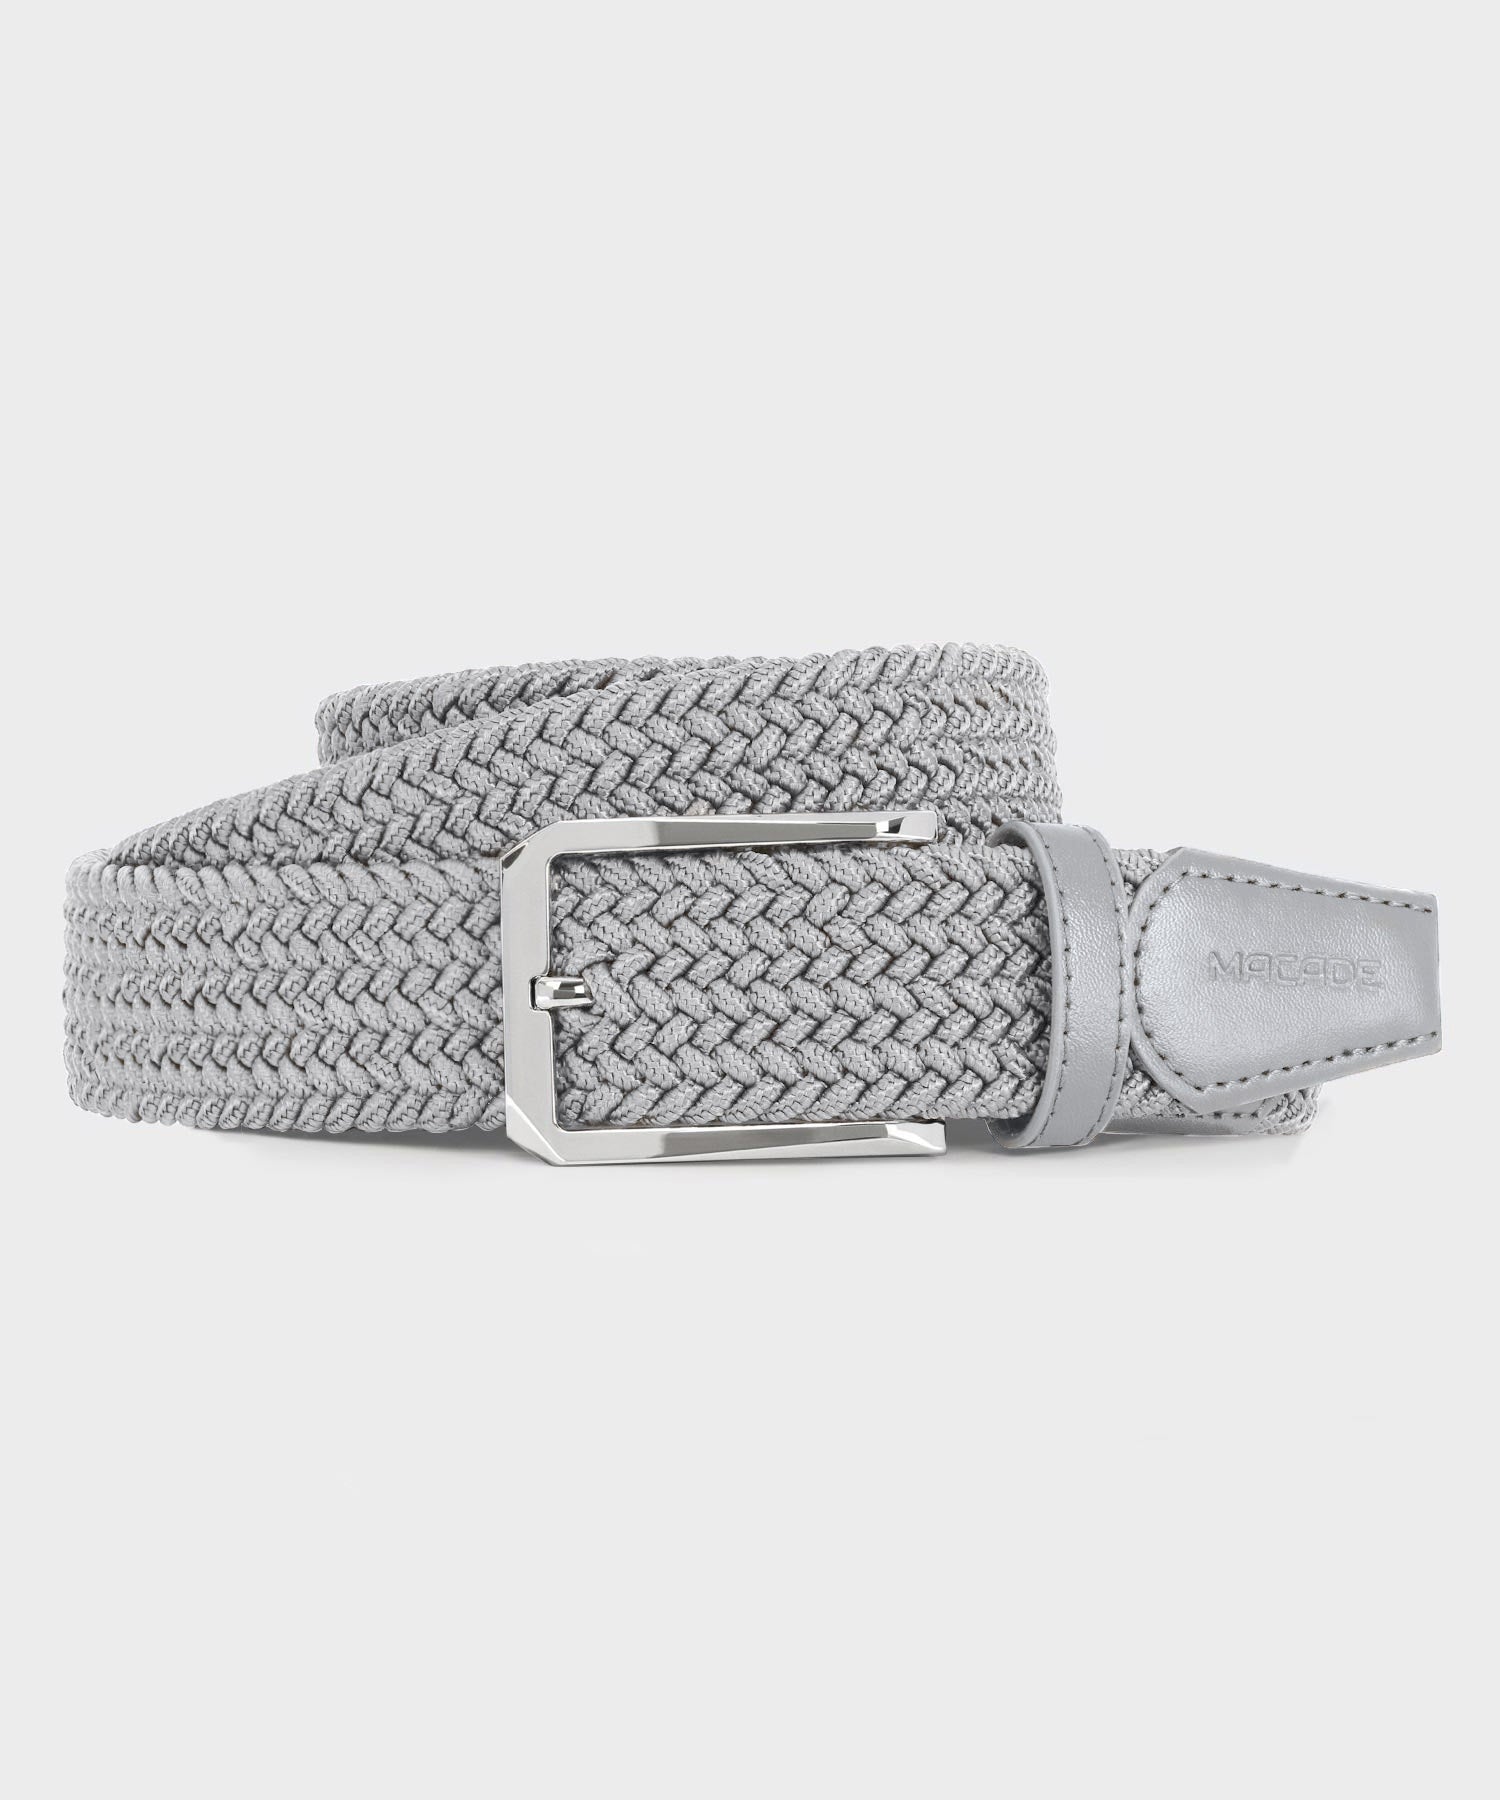 Braided Belt, Black / Grey